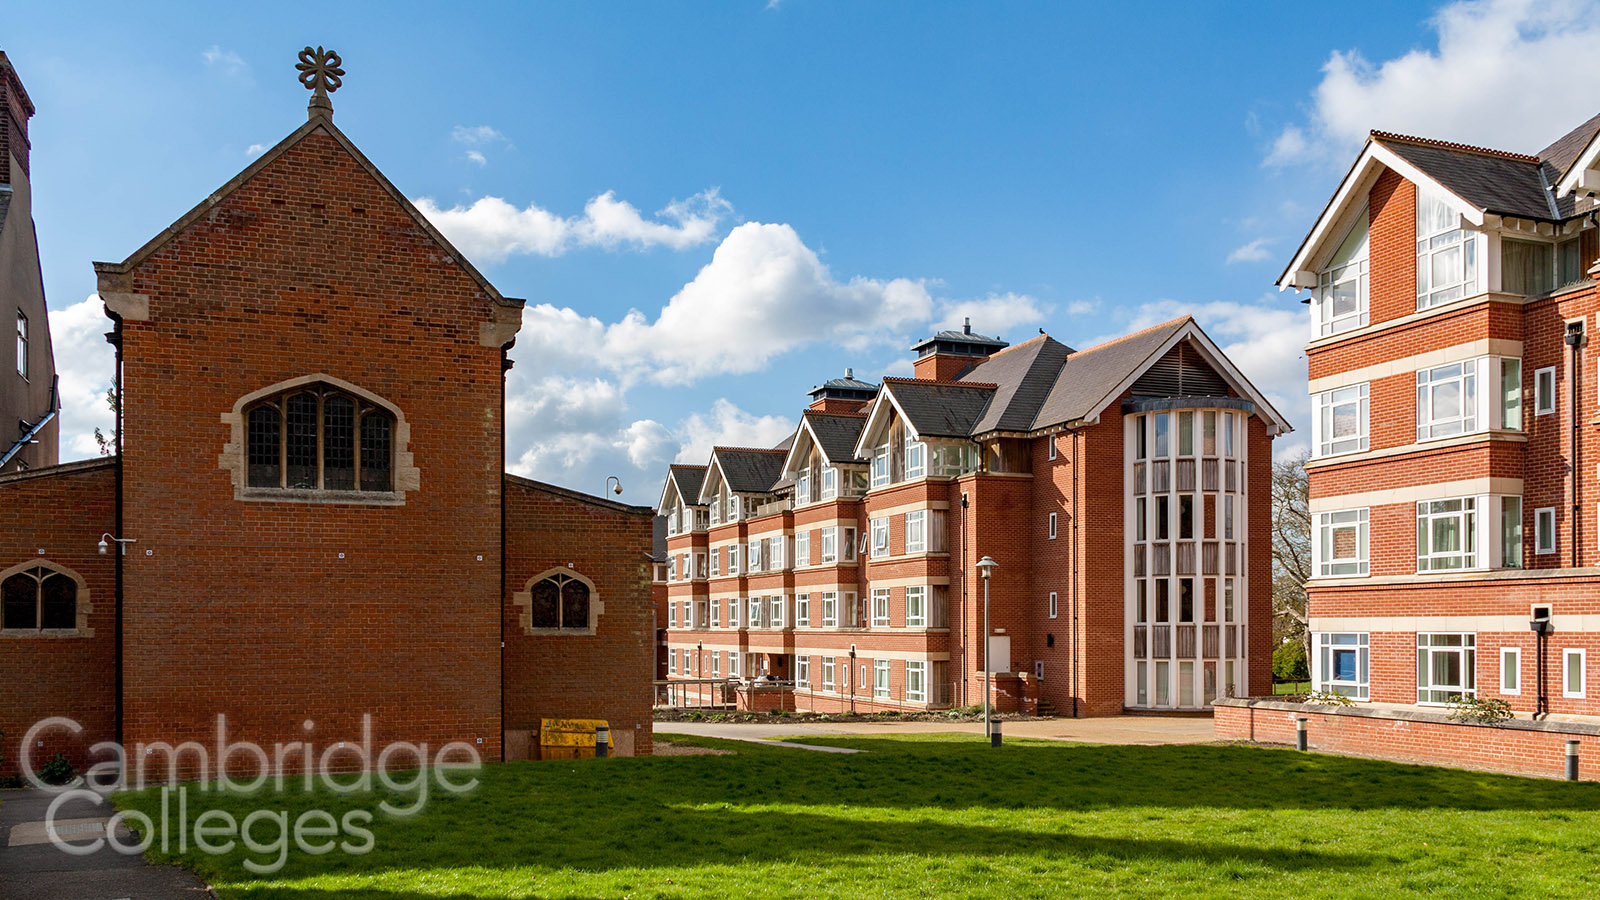 St Edmund's college chapel and modern accommodation blocks